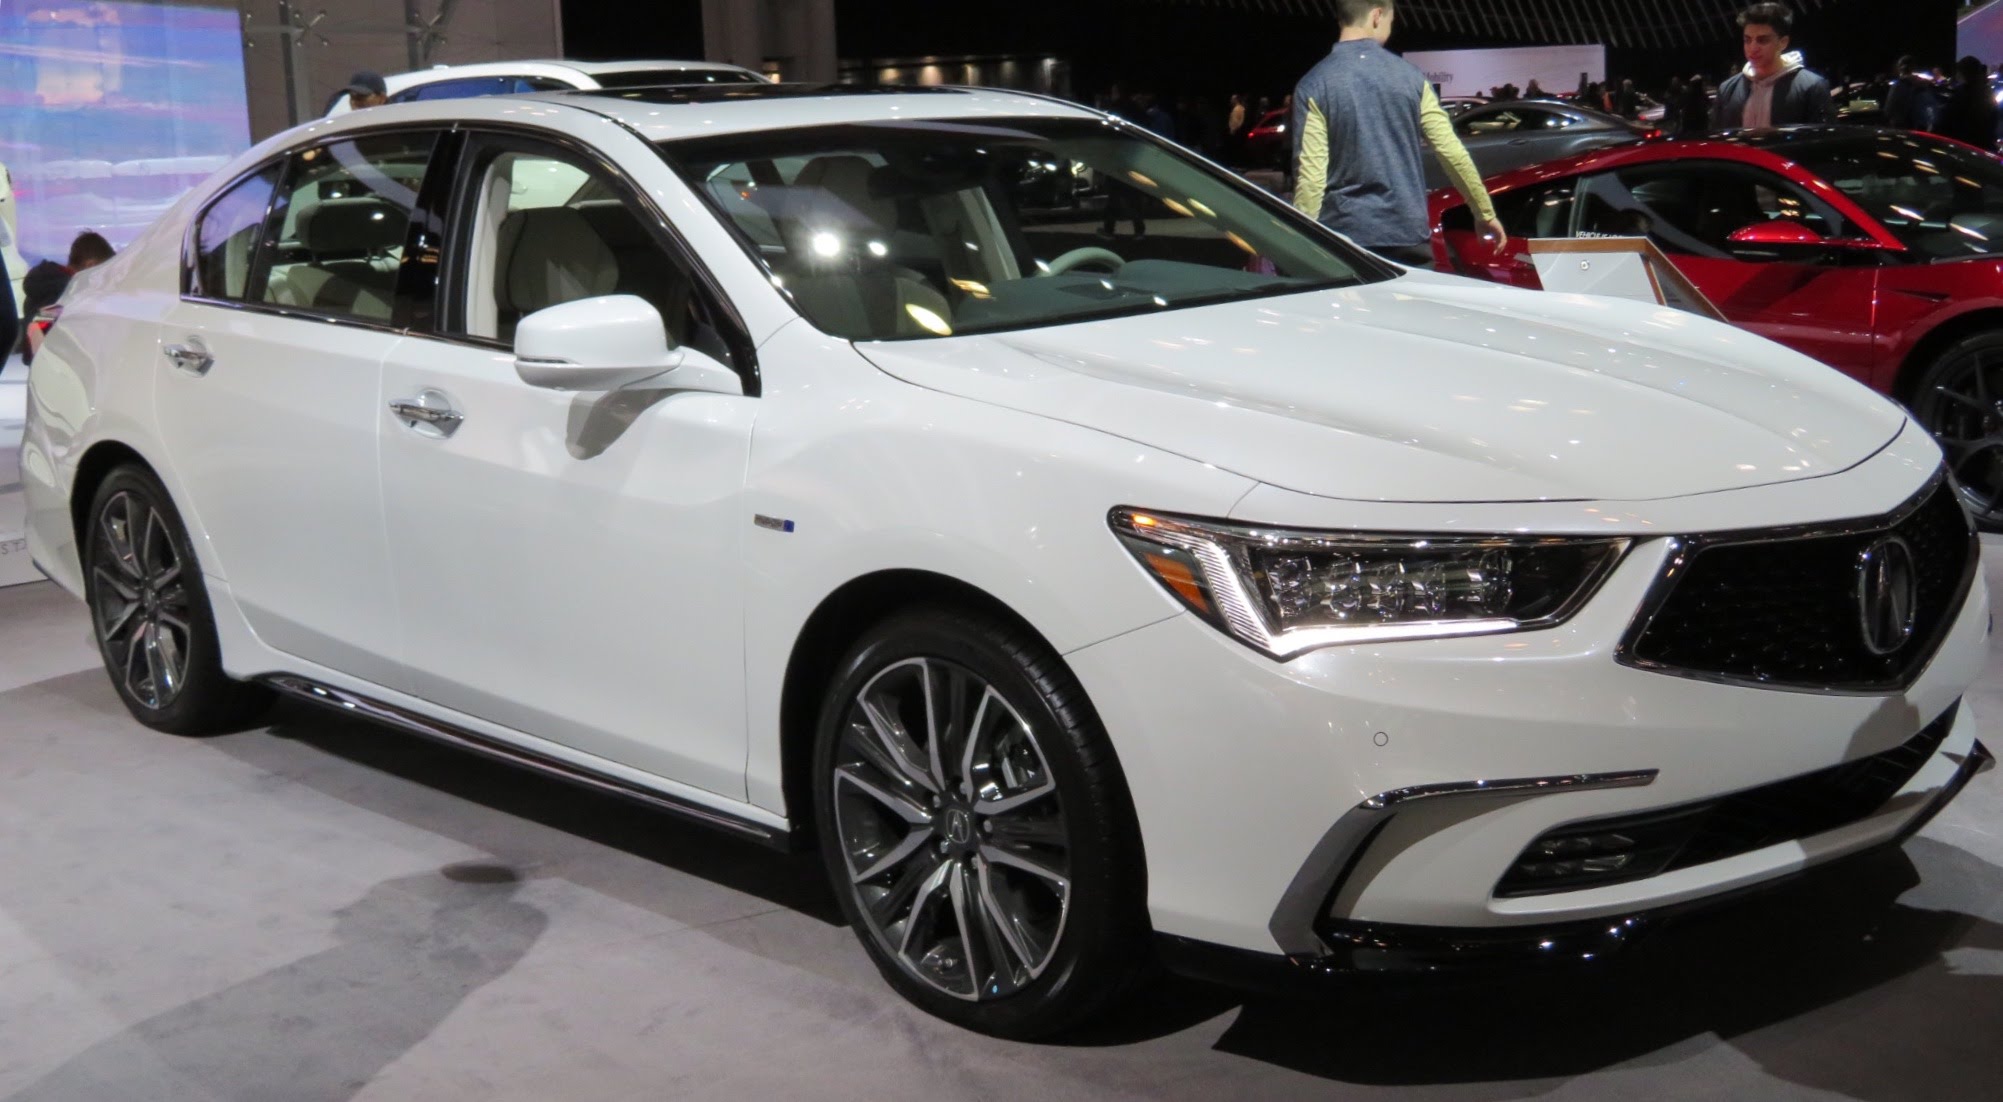 File:2018 Acura RLX sedan front 4.2.18.jpg - Wikimedia Commons